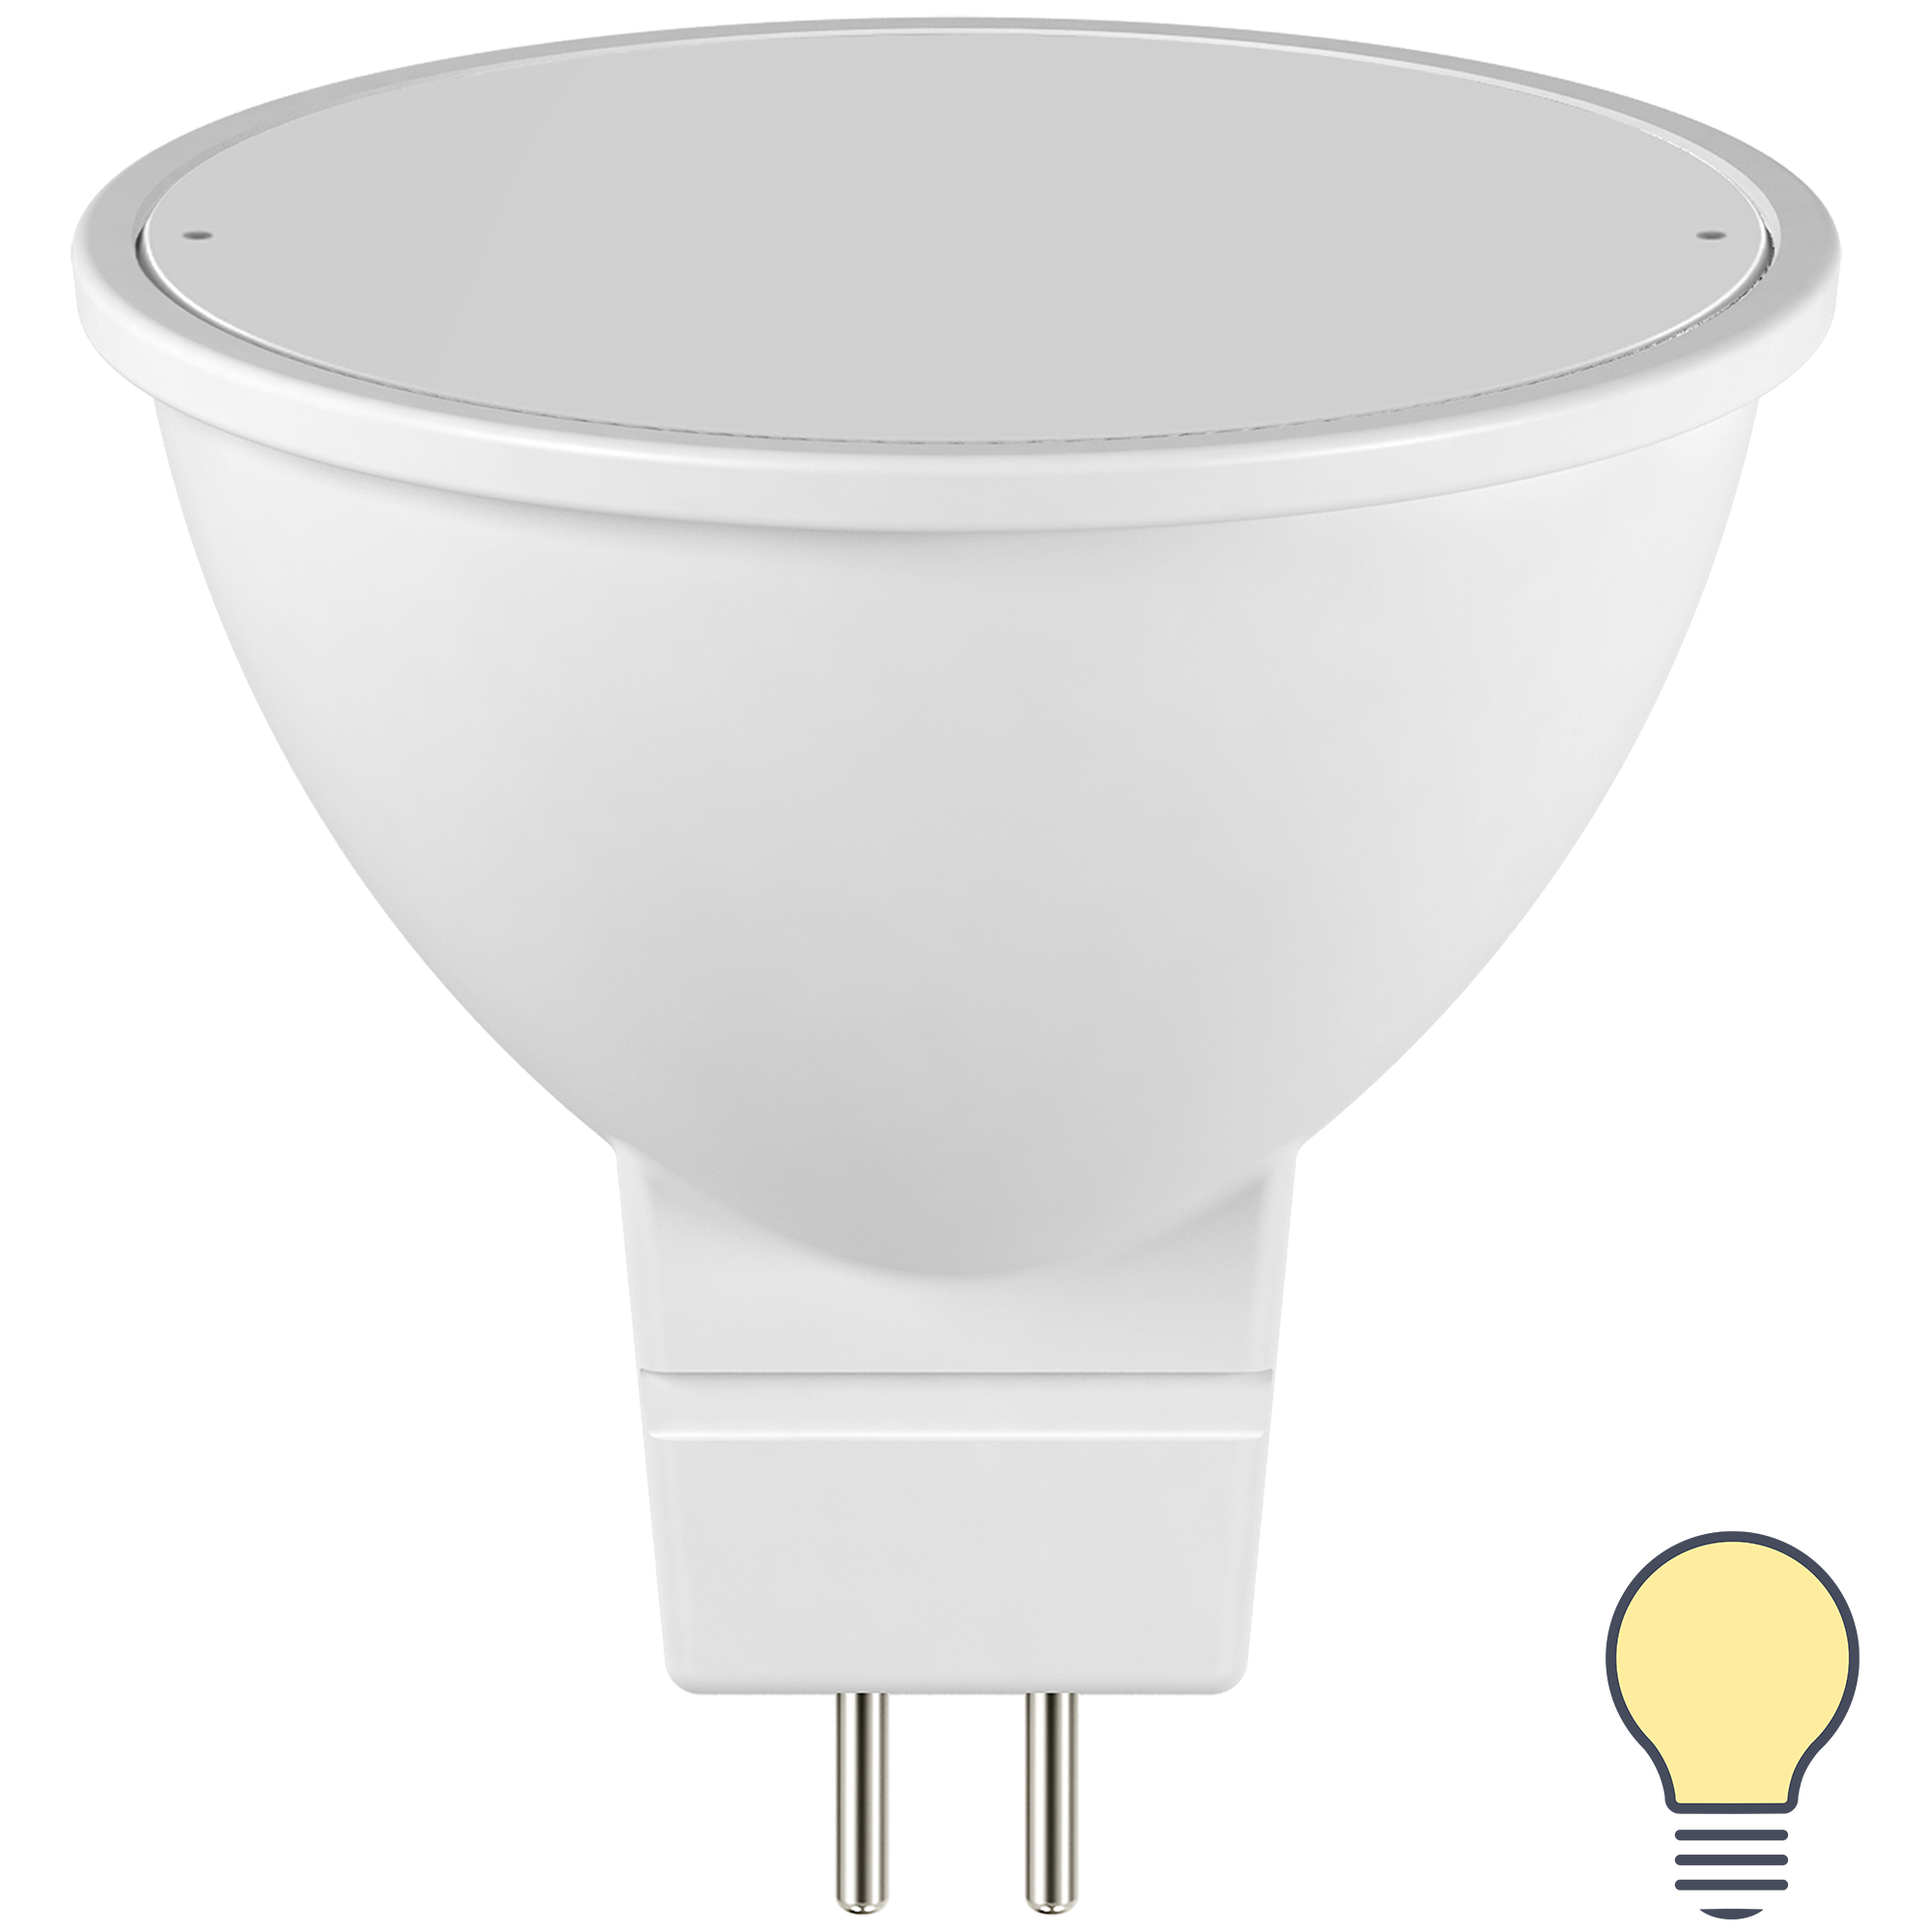 82991617 Лампа светодиодная Clear G5.3 175-250 В 6 Вт прозрачная 500 лм теплый белый свет STLM-0038580 LEXMAN